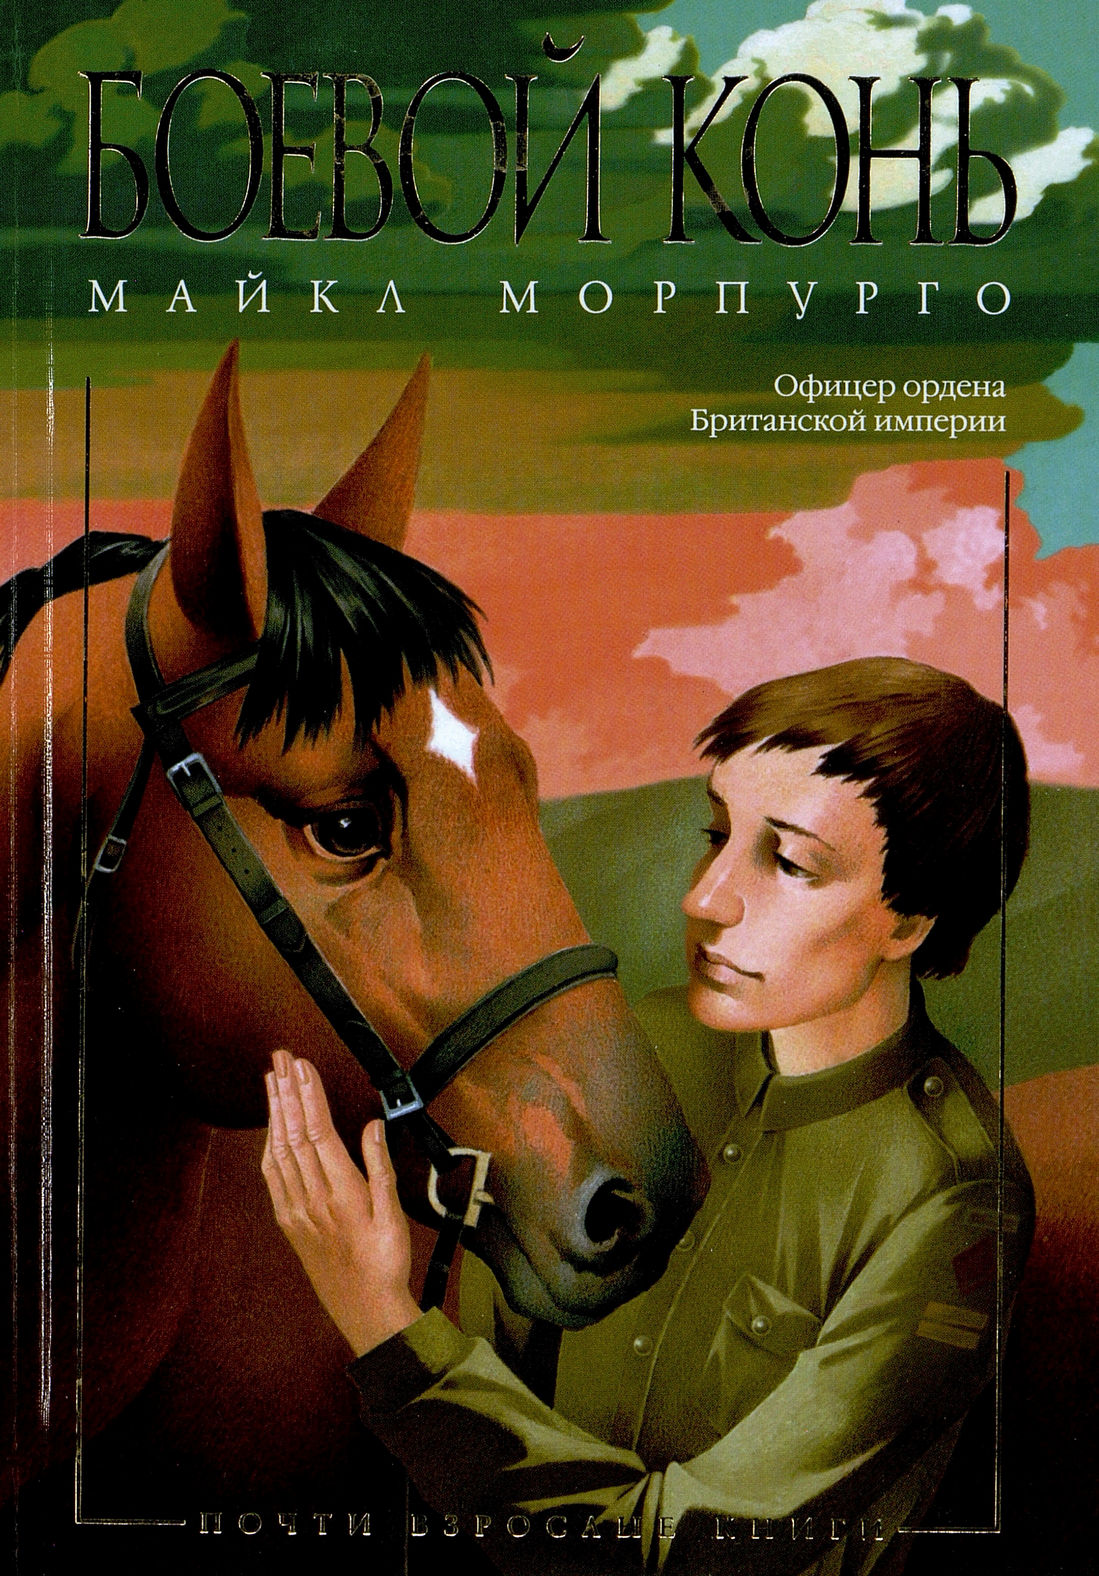 Морпурго М. Боевой конь